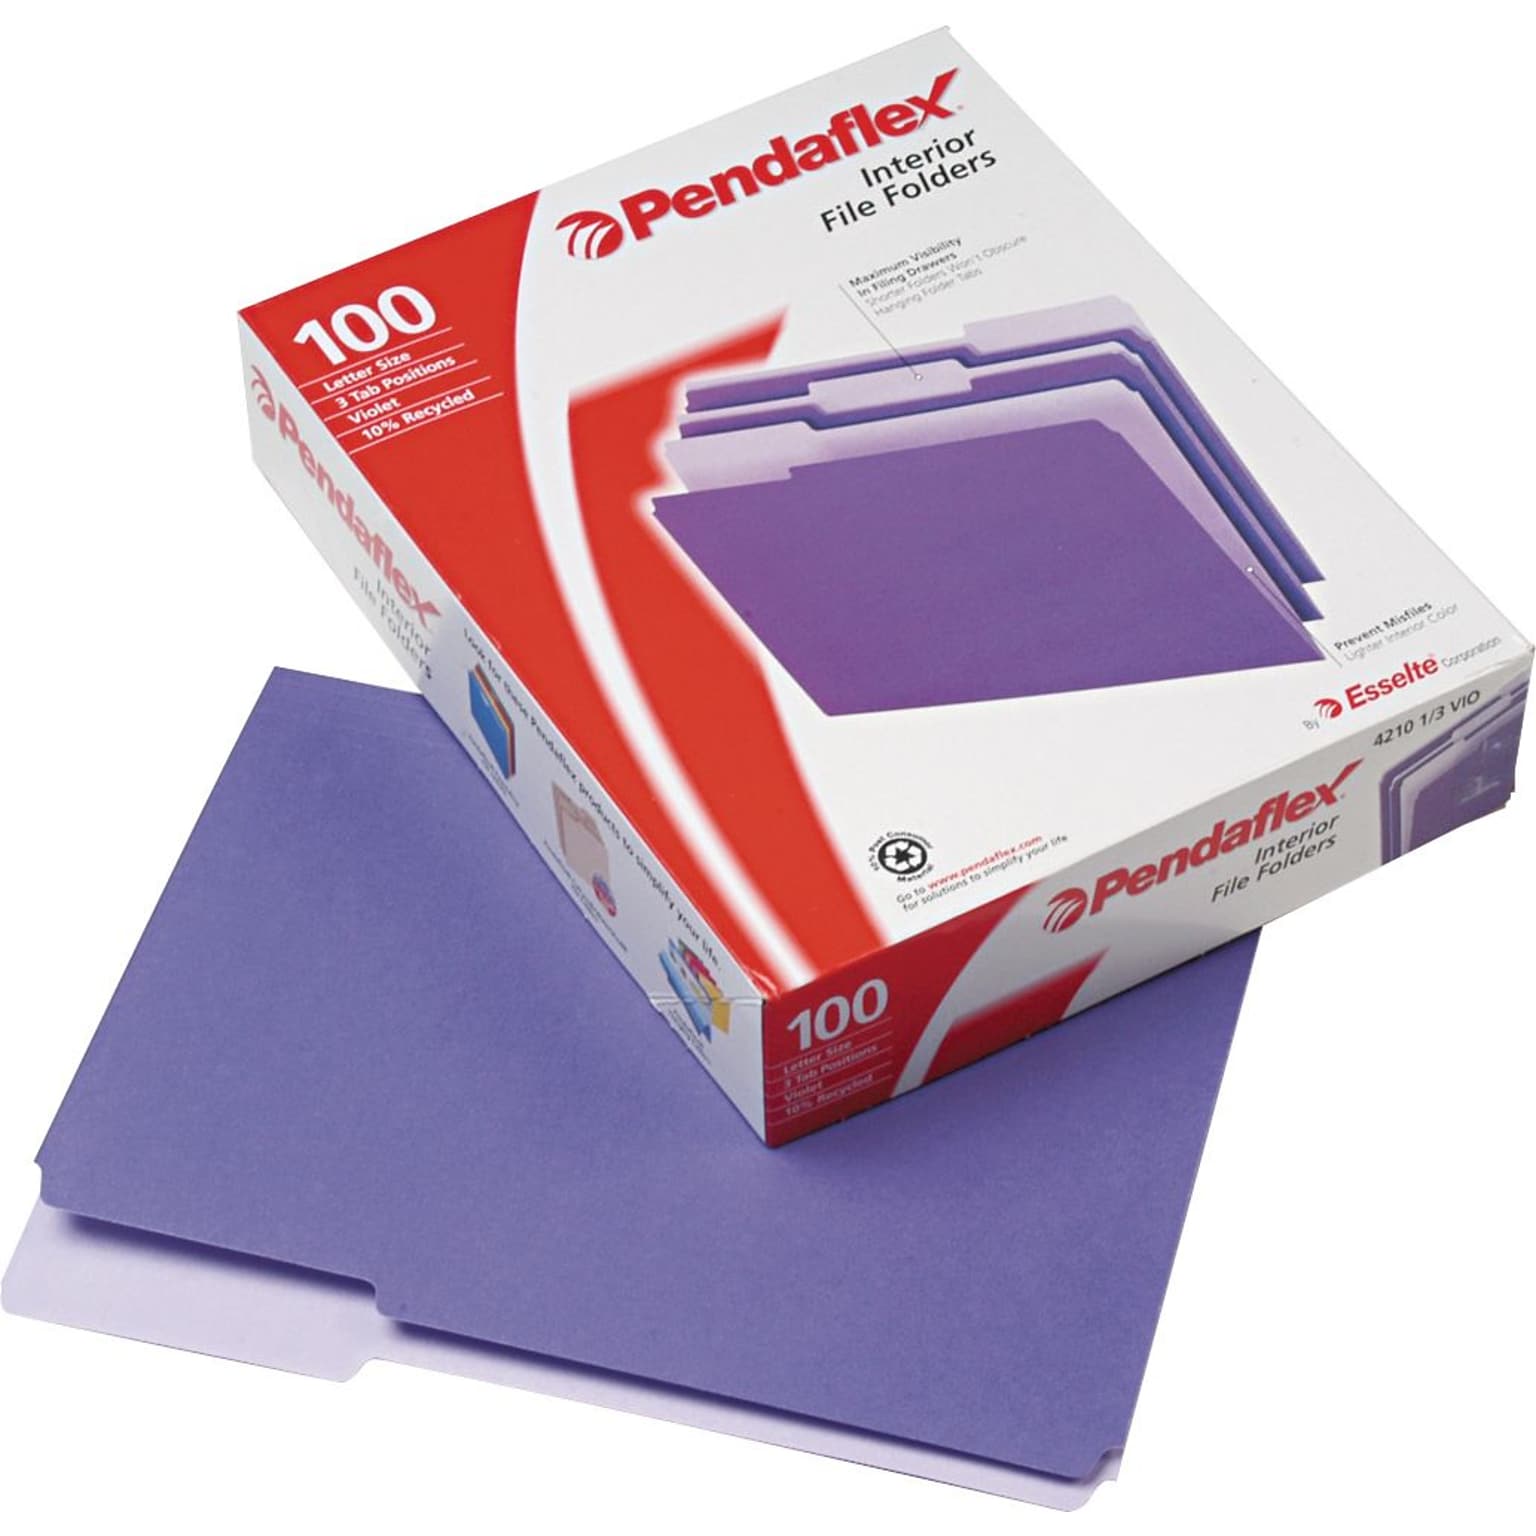 Pendaflex File Folder, Letter Size, Violet, 100/Box (PFX 4210 1/3 VIO)